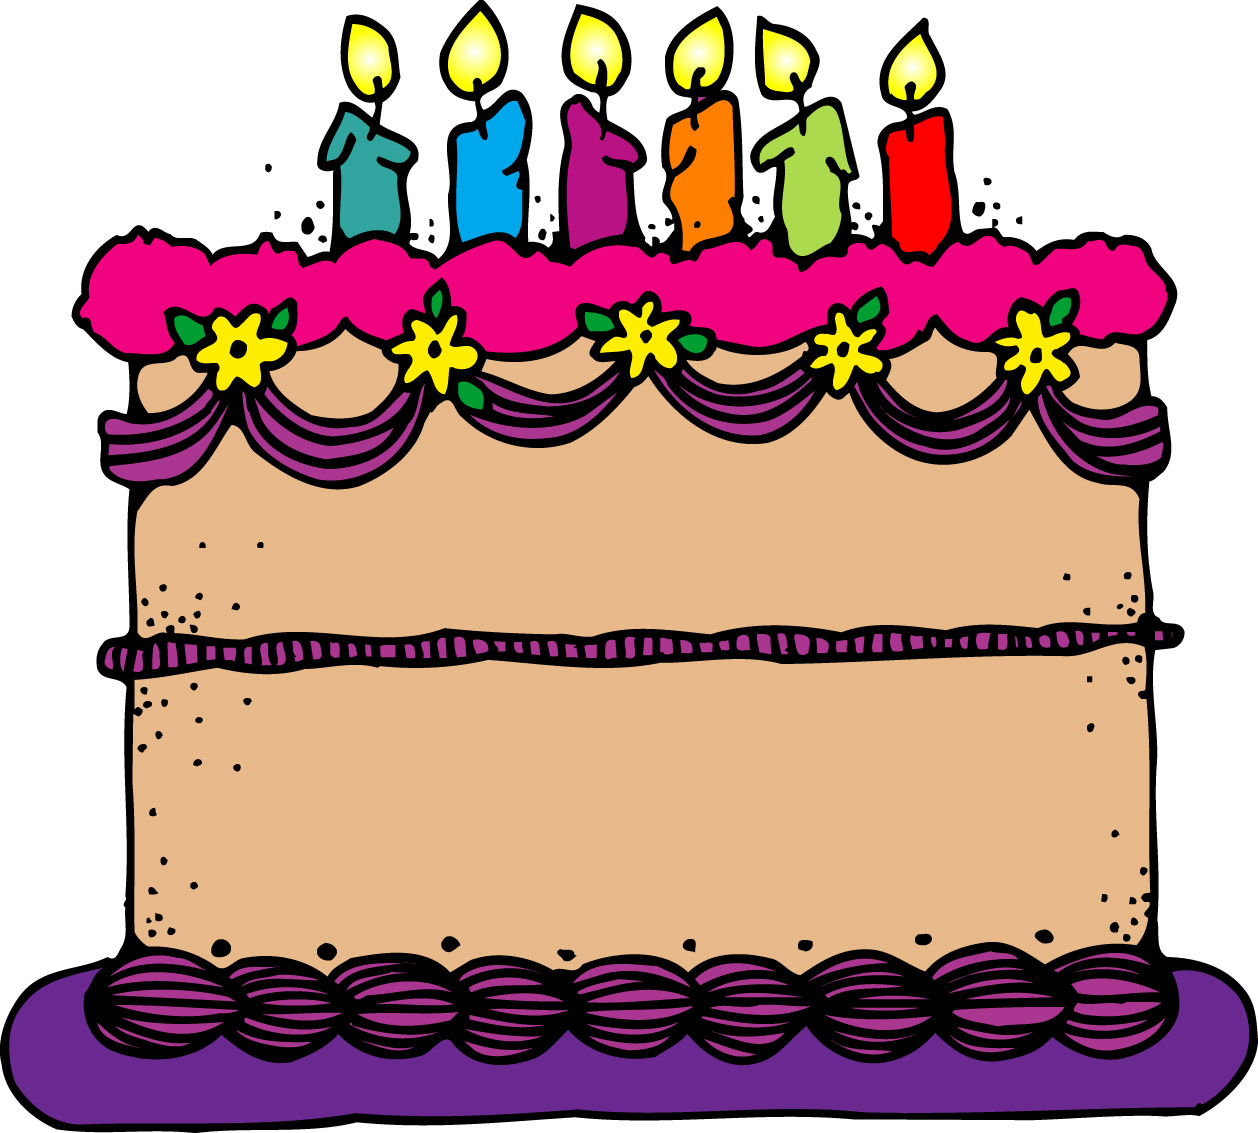 Birthday cake clip art free . - Cake Clip Art